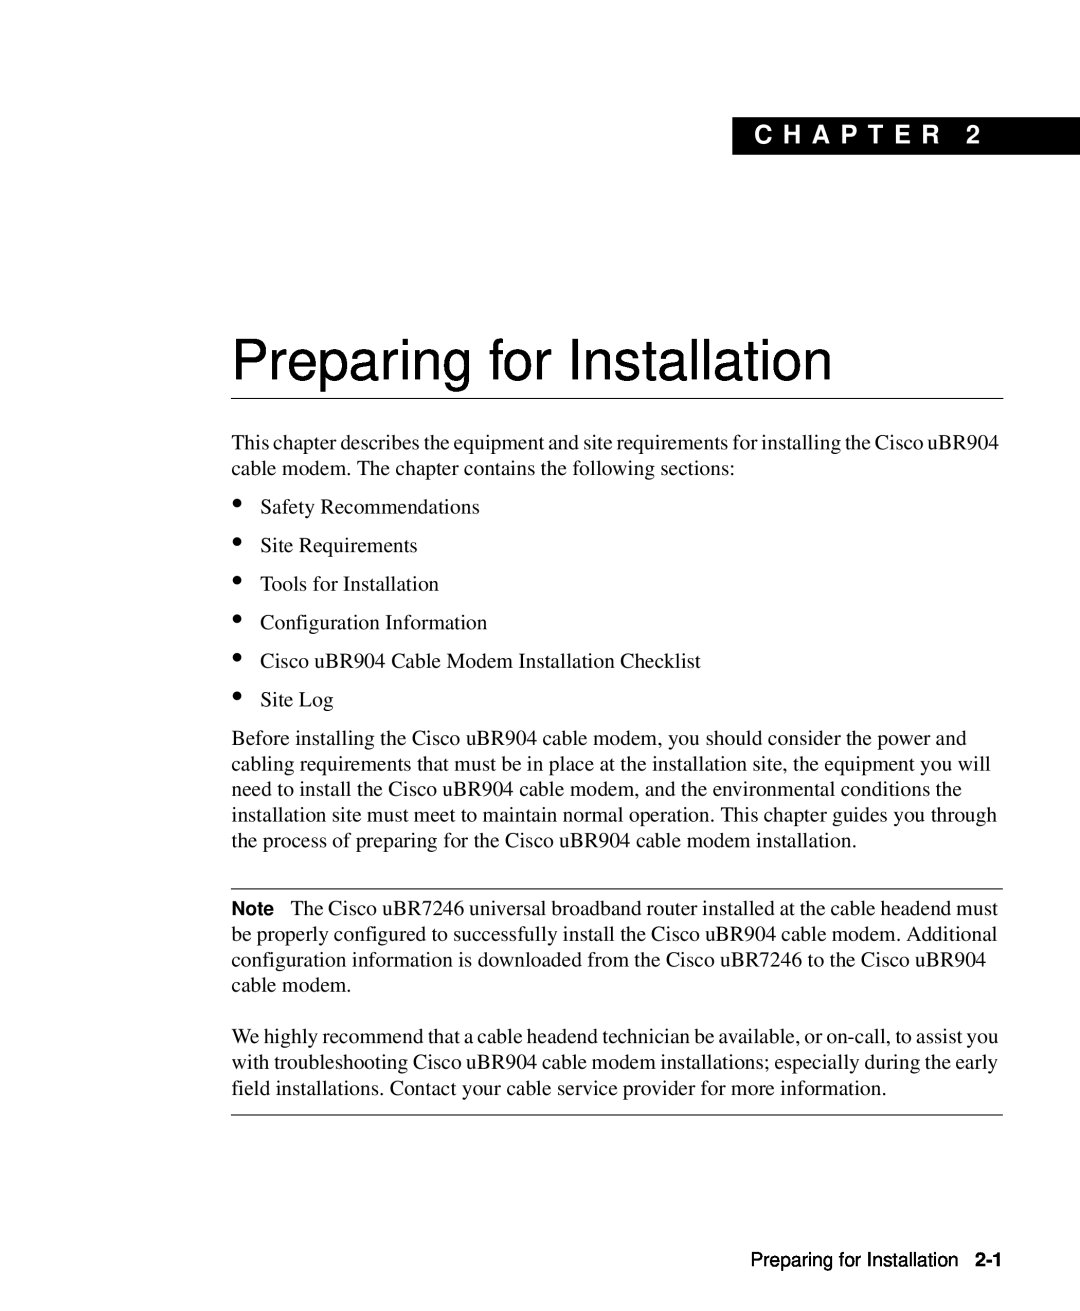 Cisco Systems UBR904 manual Preparing for Installation, C H A P T E R 